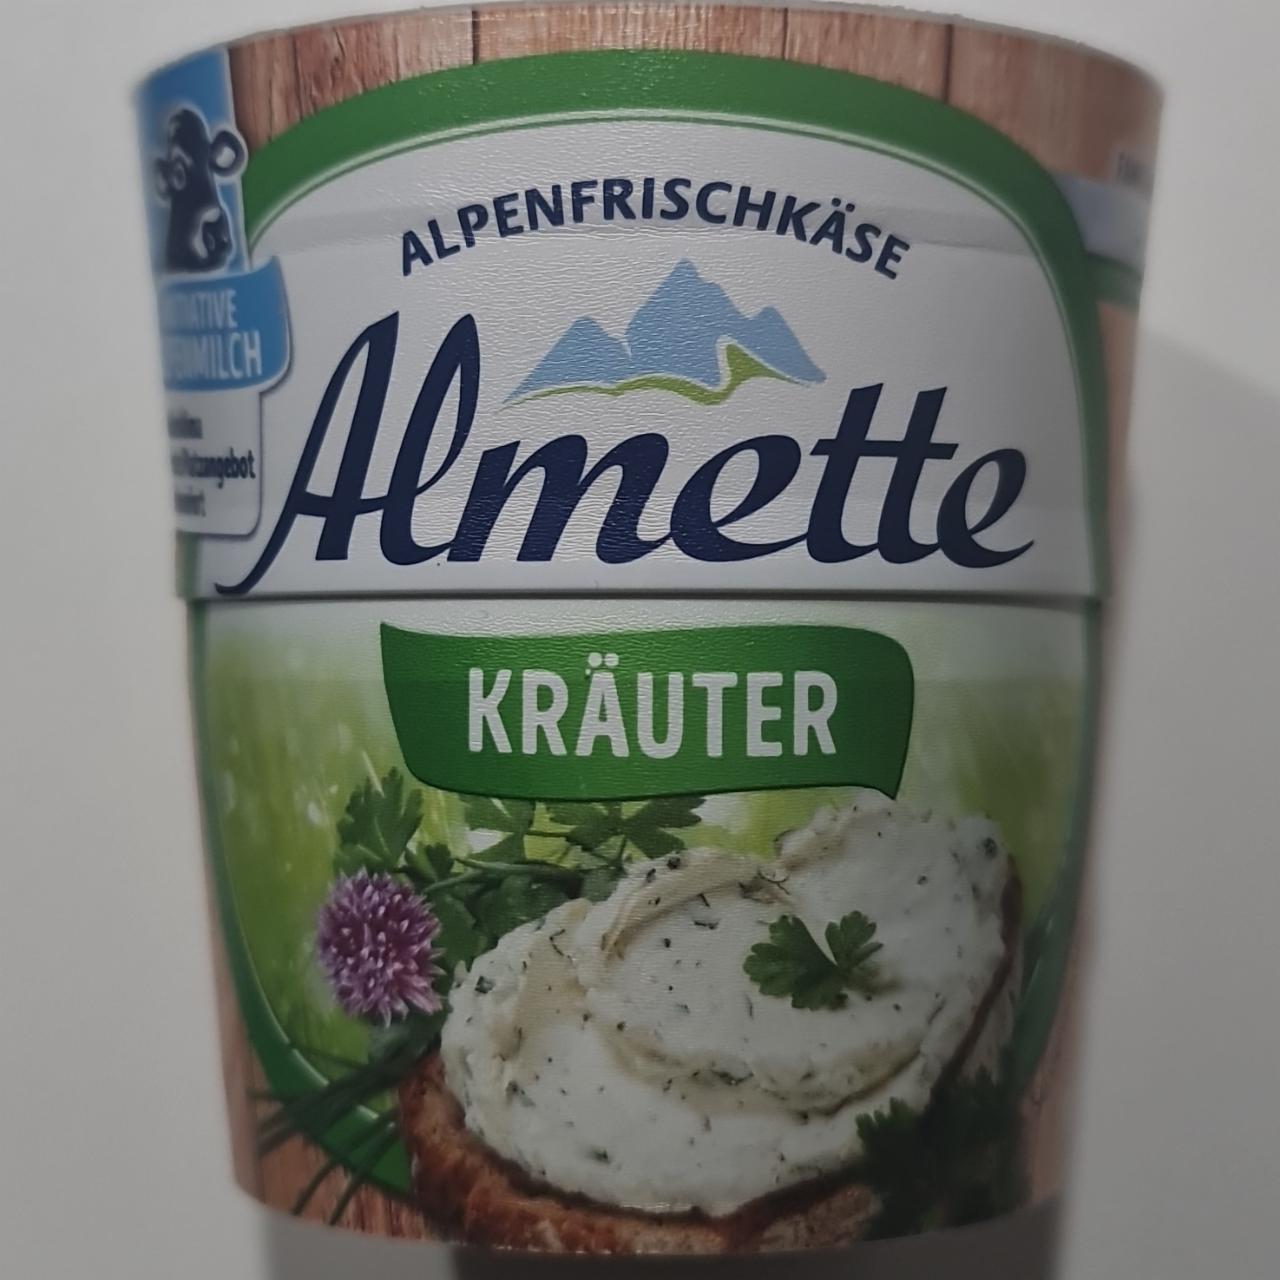 Fotografie - Alpenfrischkäse Kräuter Almette